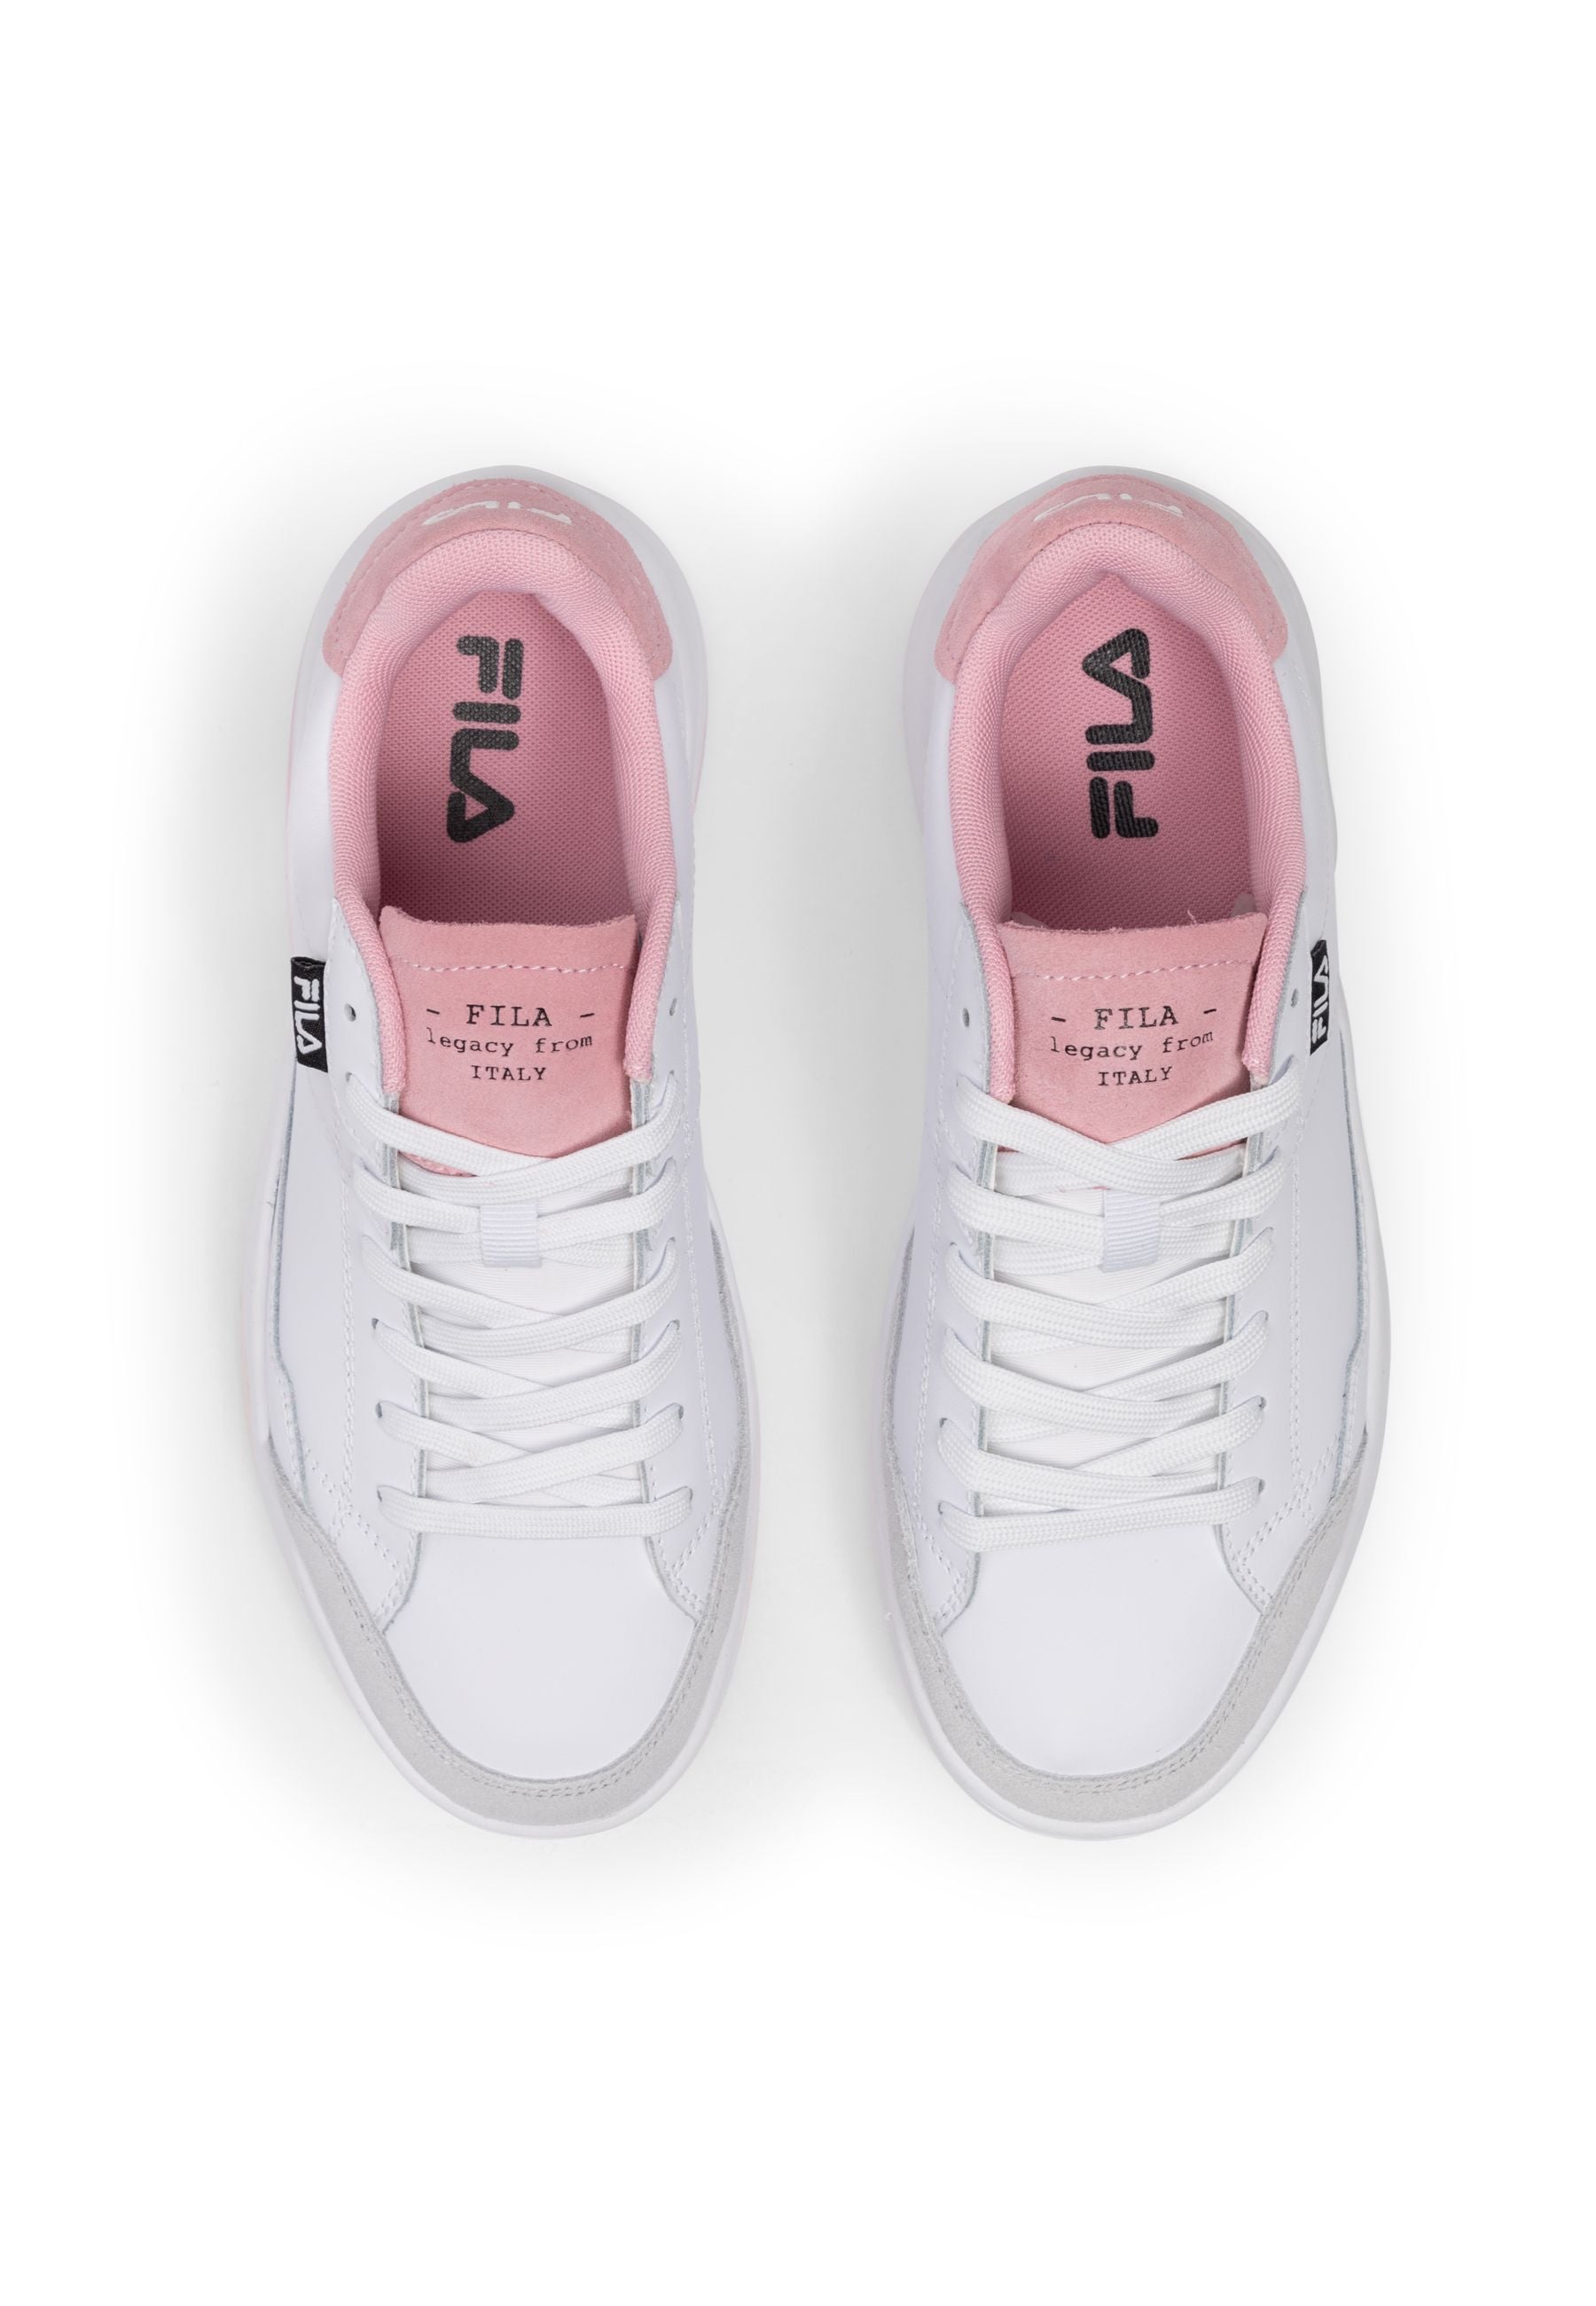 Fila Avenida Wmn in White-Pink Nectar Sneakers Fila   